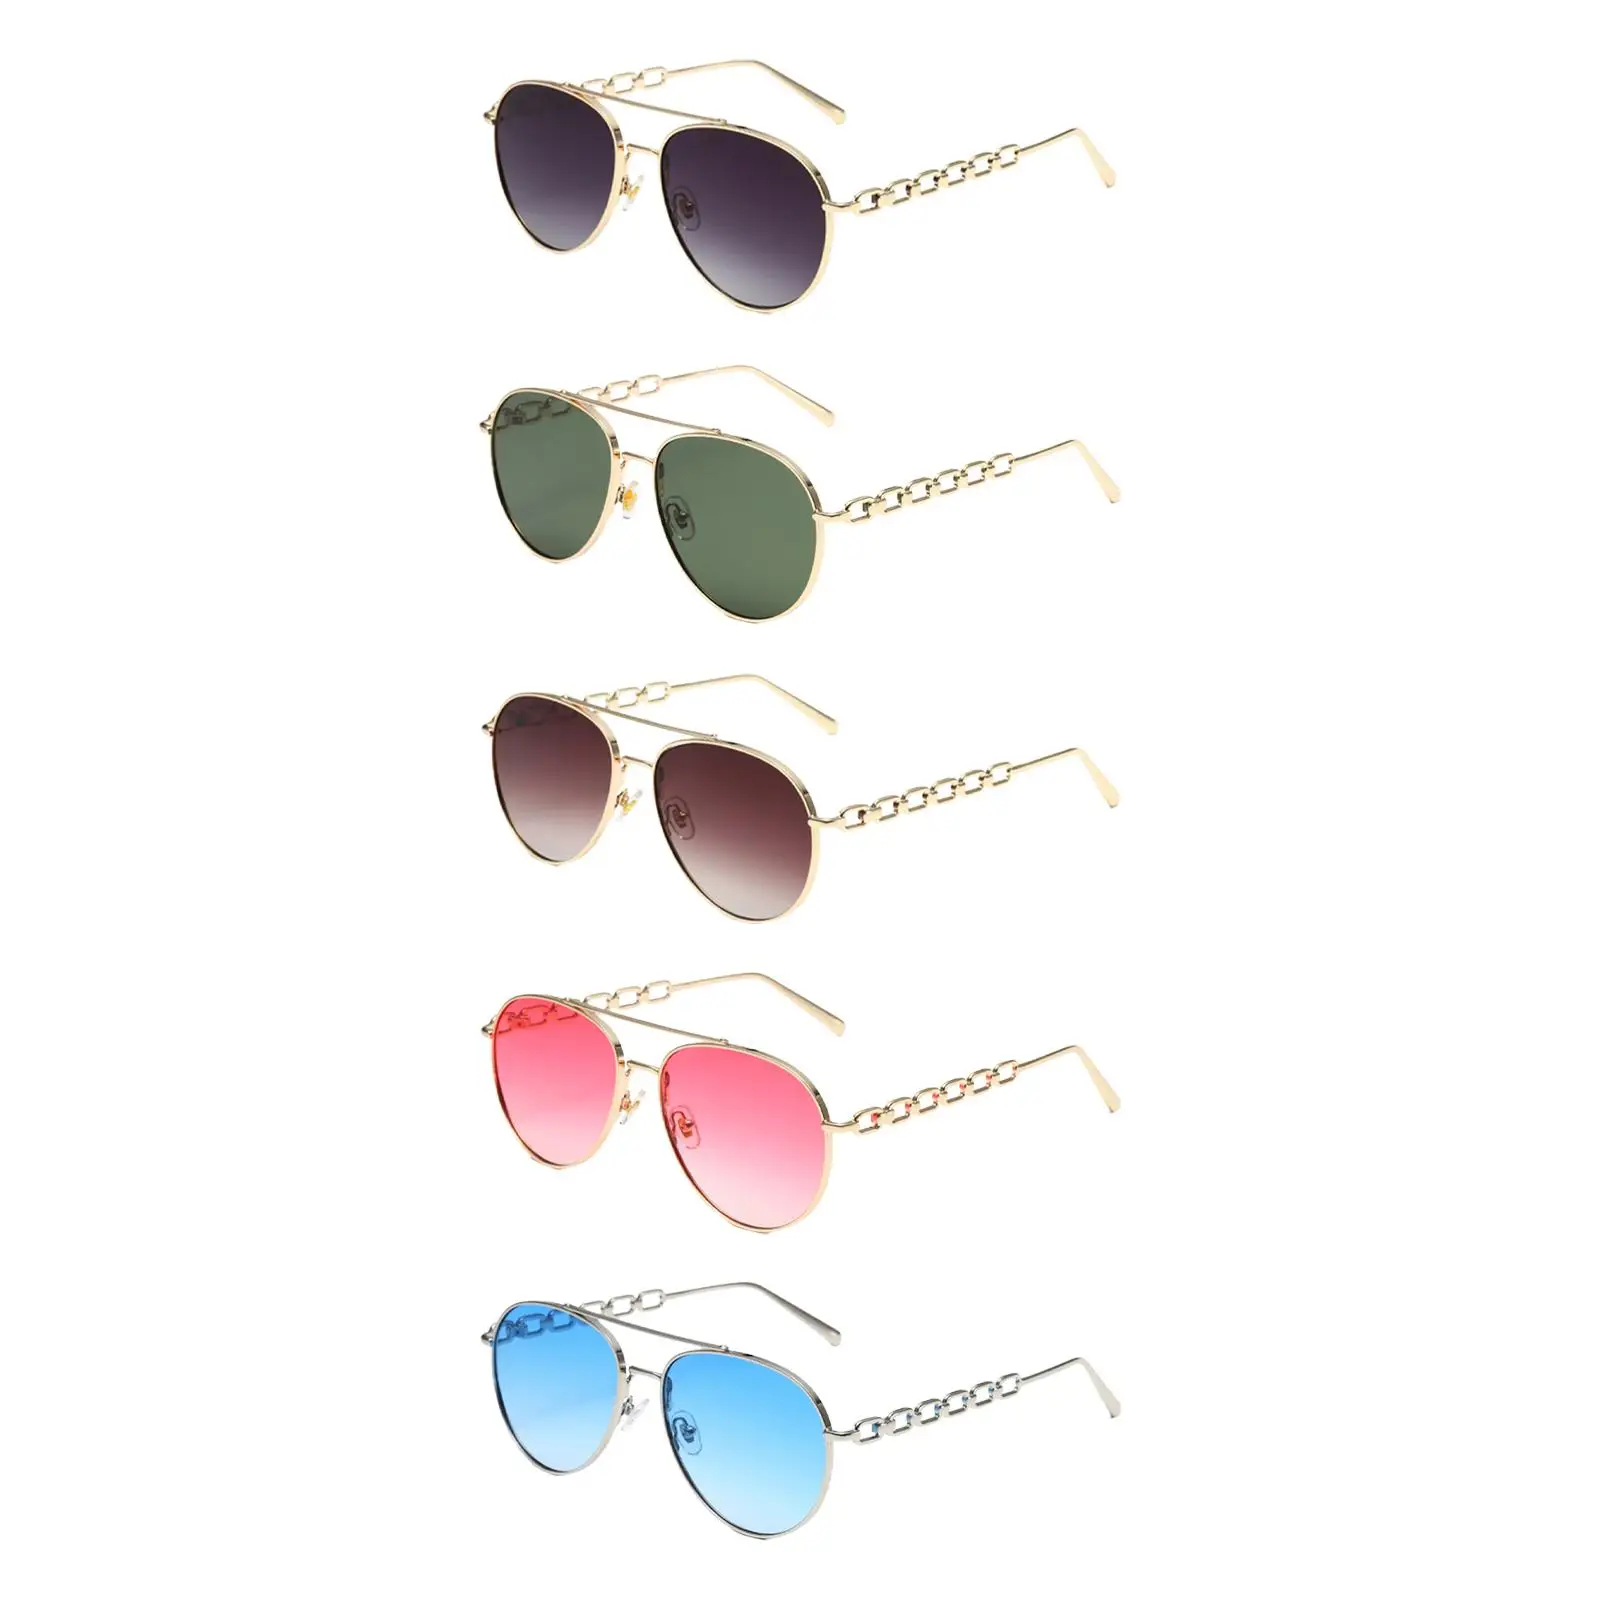 Women Men Pilot Sunglasses Eyewear Vintage Style UV400 Protection Shades Glasses